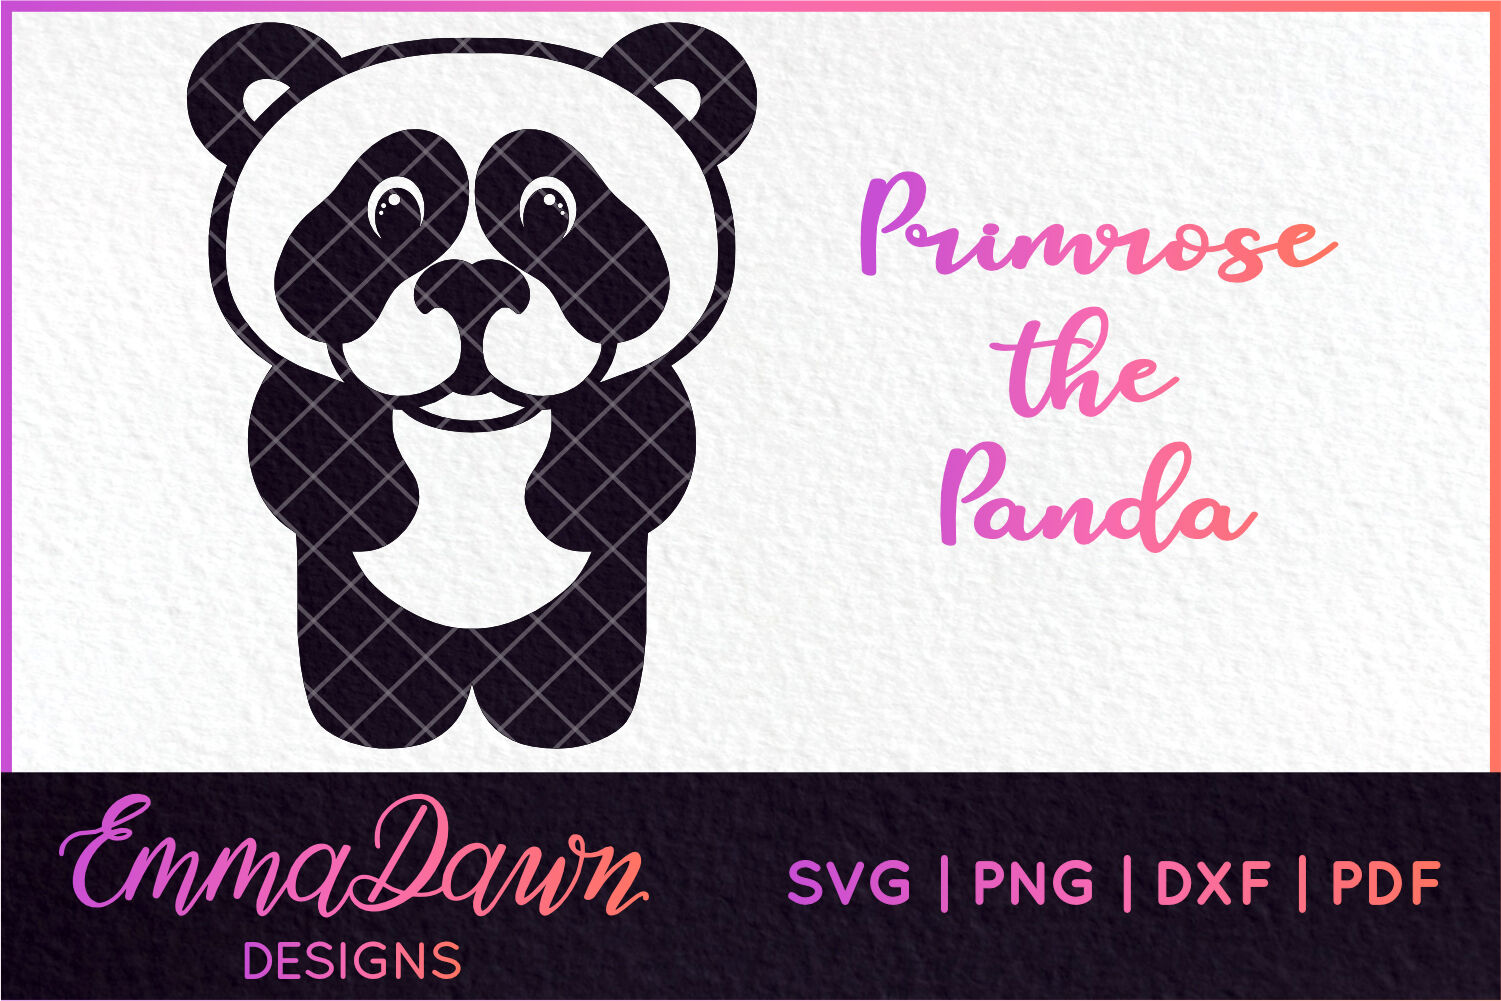 Download Primrose Thepanda Mandala Zentangle 3 Designs Svg By Emma Dawn Designs Thehungryjpeg Com